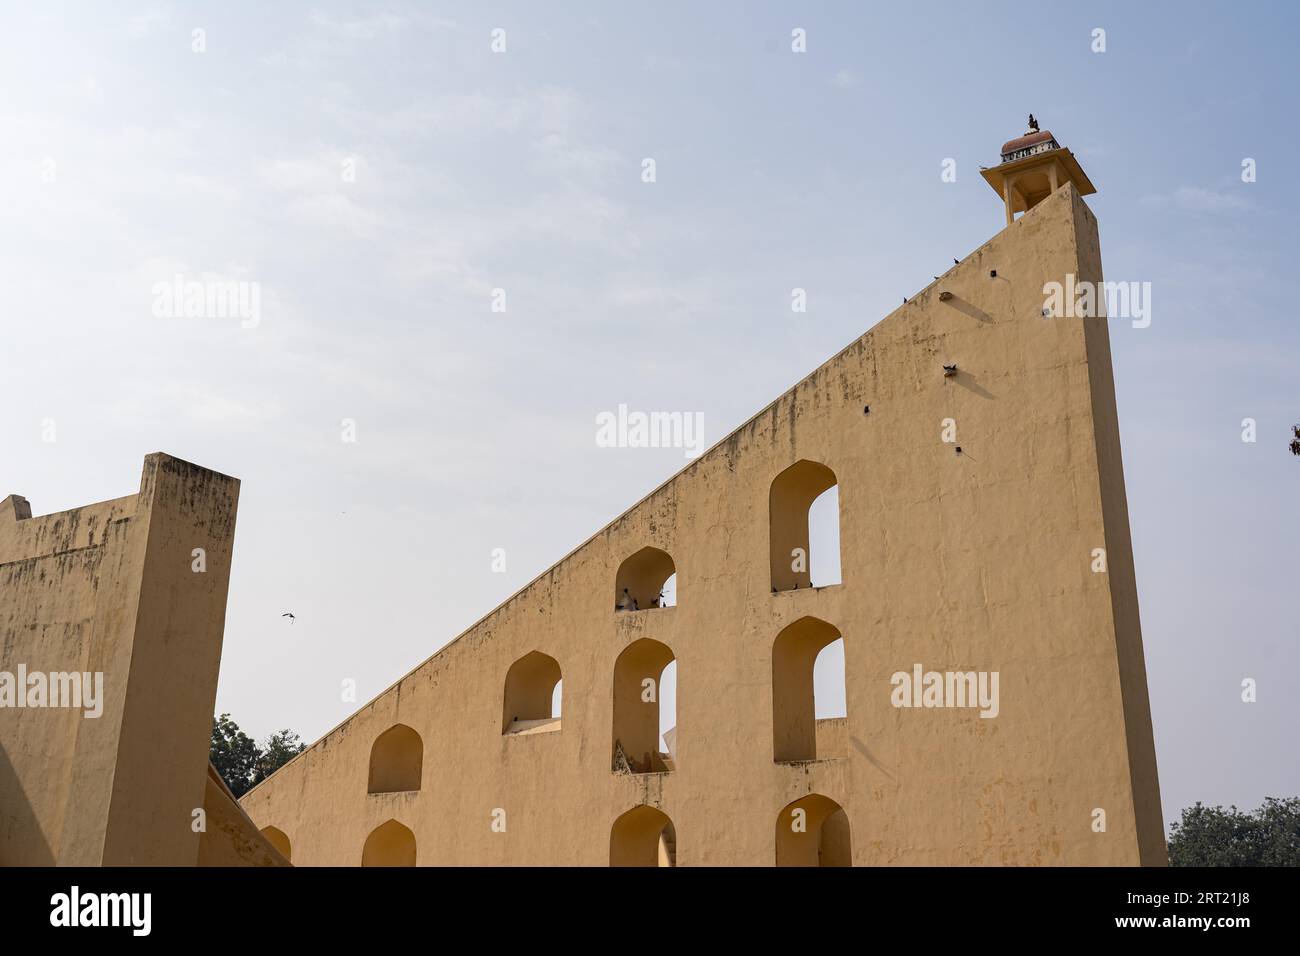 Jaipur, India, 11 dicembre 2019: Strumenti astronomici presso lo storico Jantar Mantar Obsevrvatory Foto Stock